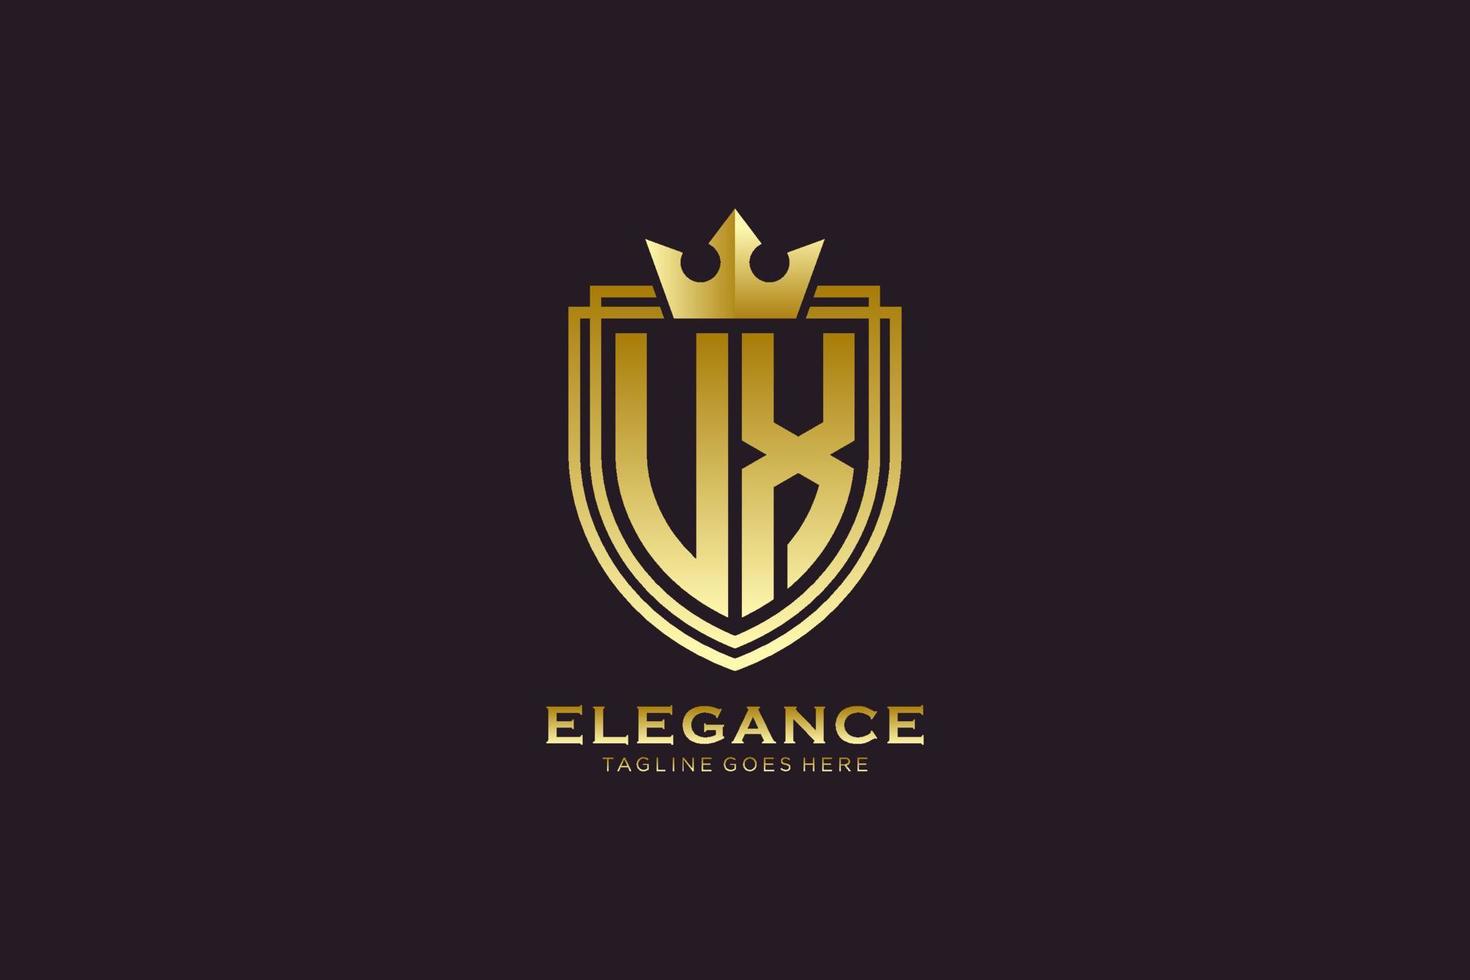 logotipo de monograma de luxo elegante ux inicial ou modelo de crachá com pergaminhos e coroa real - perfeito para projetos de marca luxuosos vetor